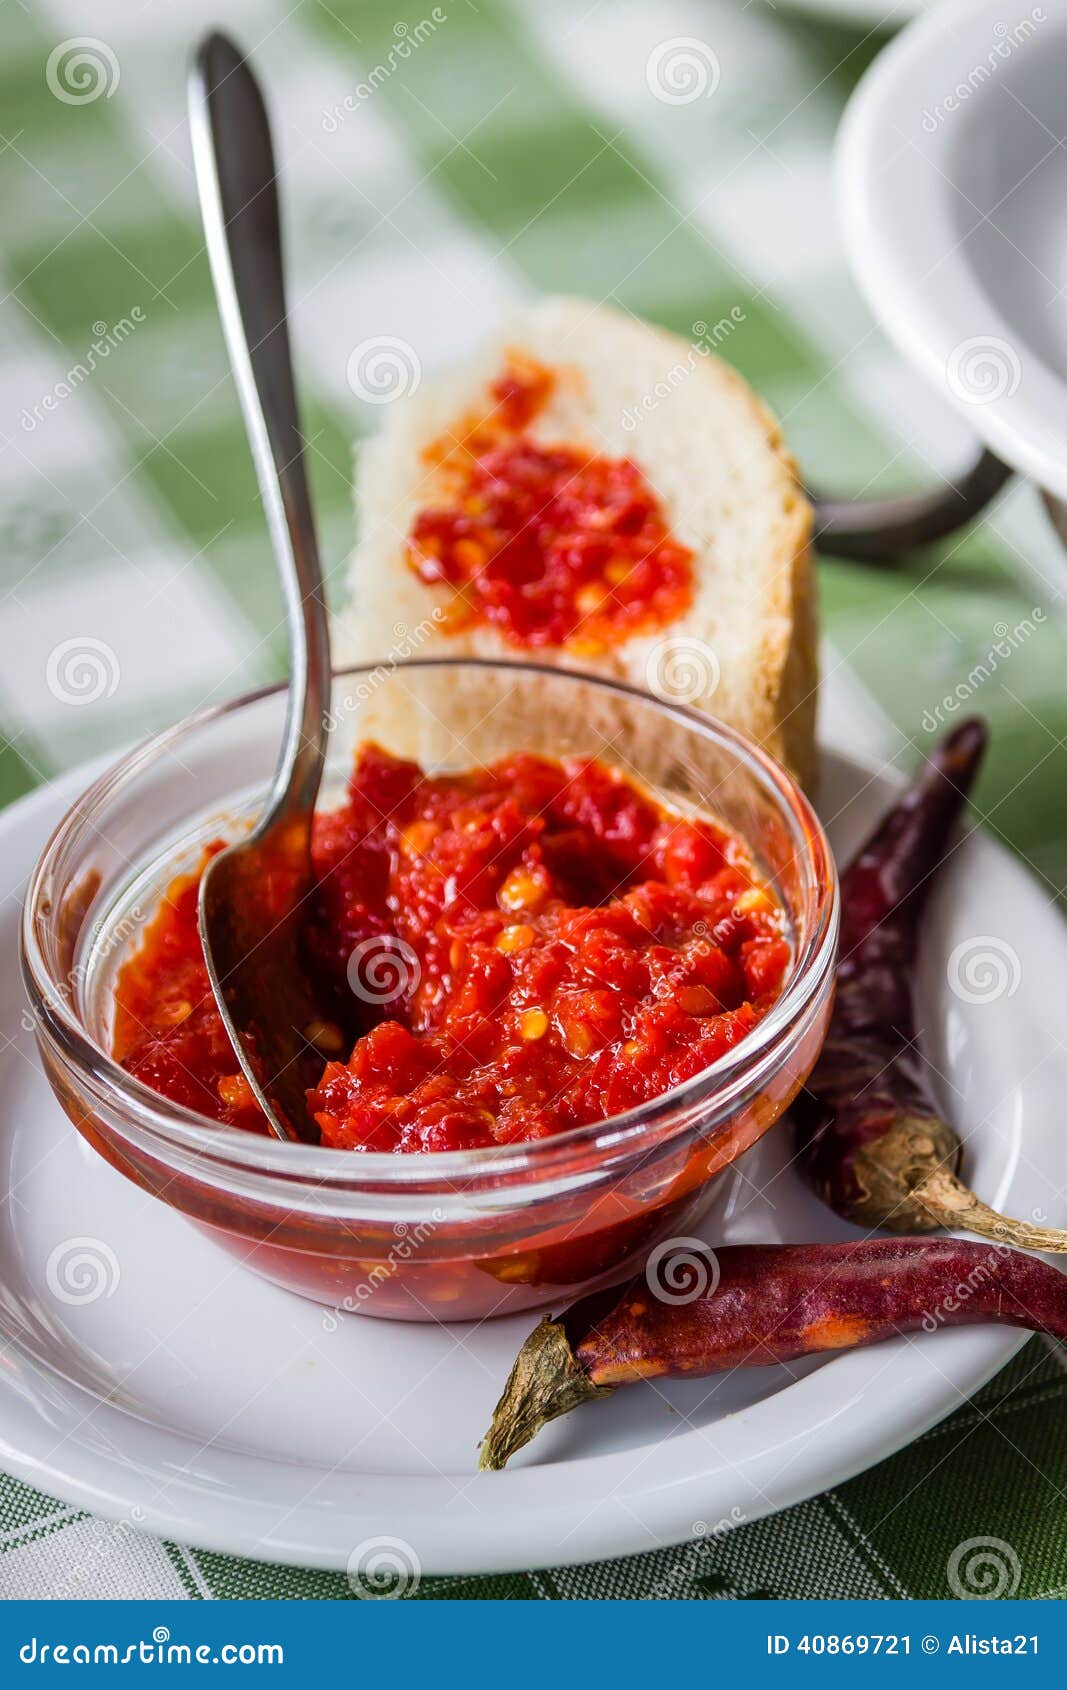 raken Amerika Klik Gourmet Hot Sauce Adjika with Chili Pepper on the Plate Stock Image - Image  of vegetable, vegetarian: 40869721